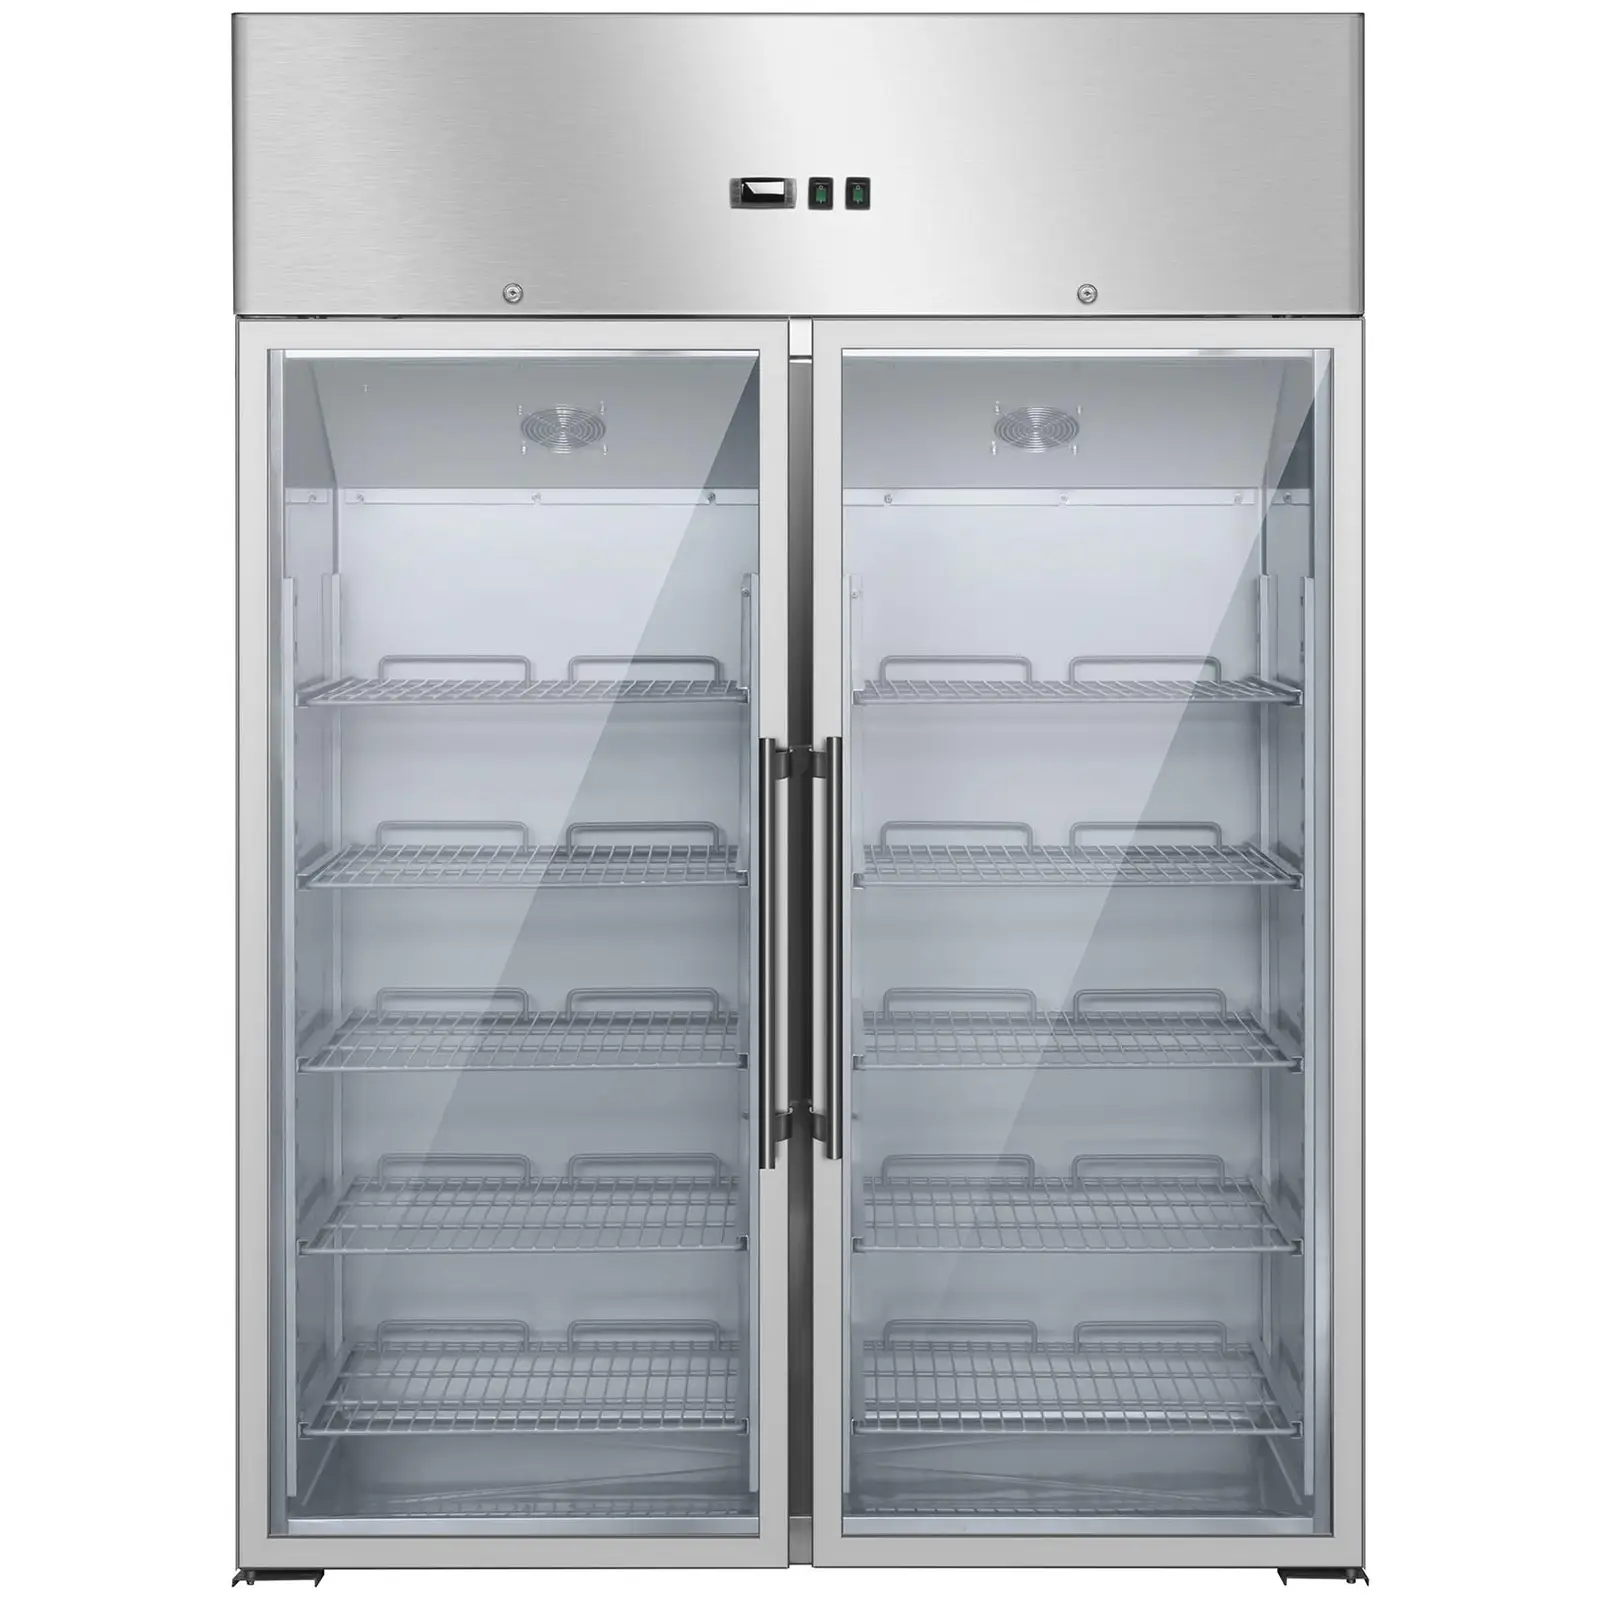 Kjøleskap i glassdør - 984 L